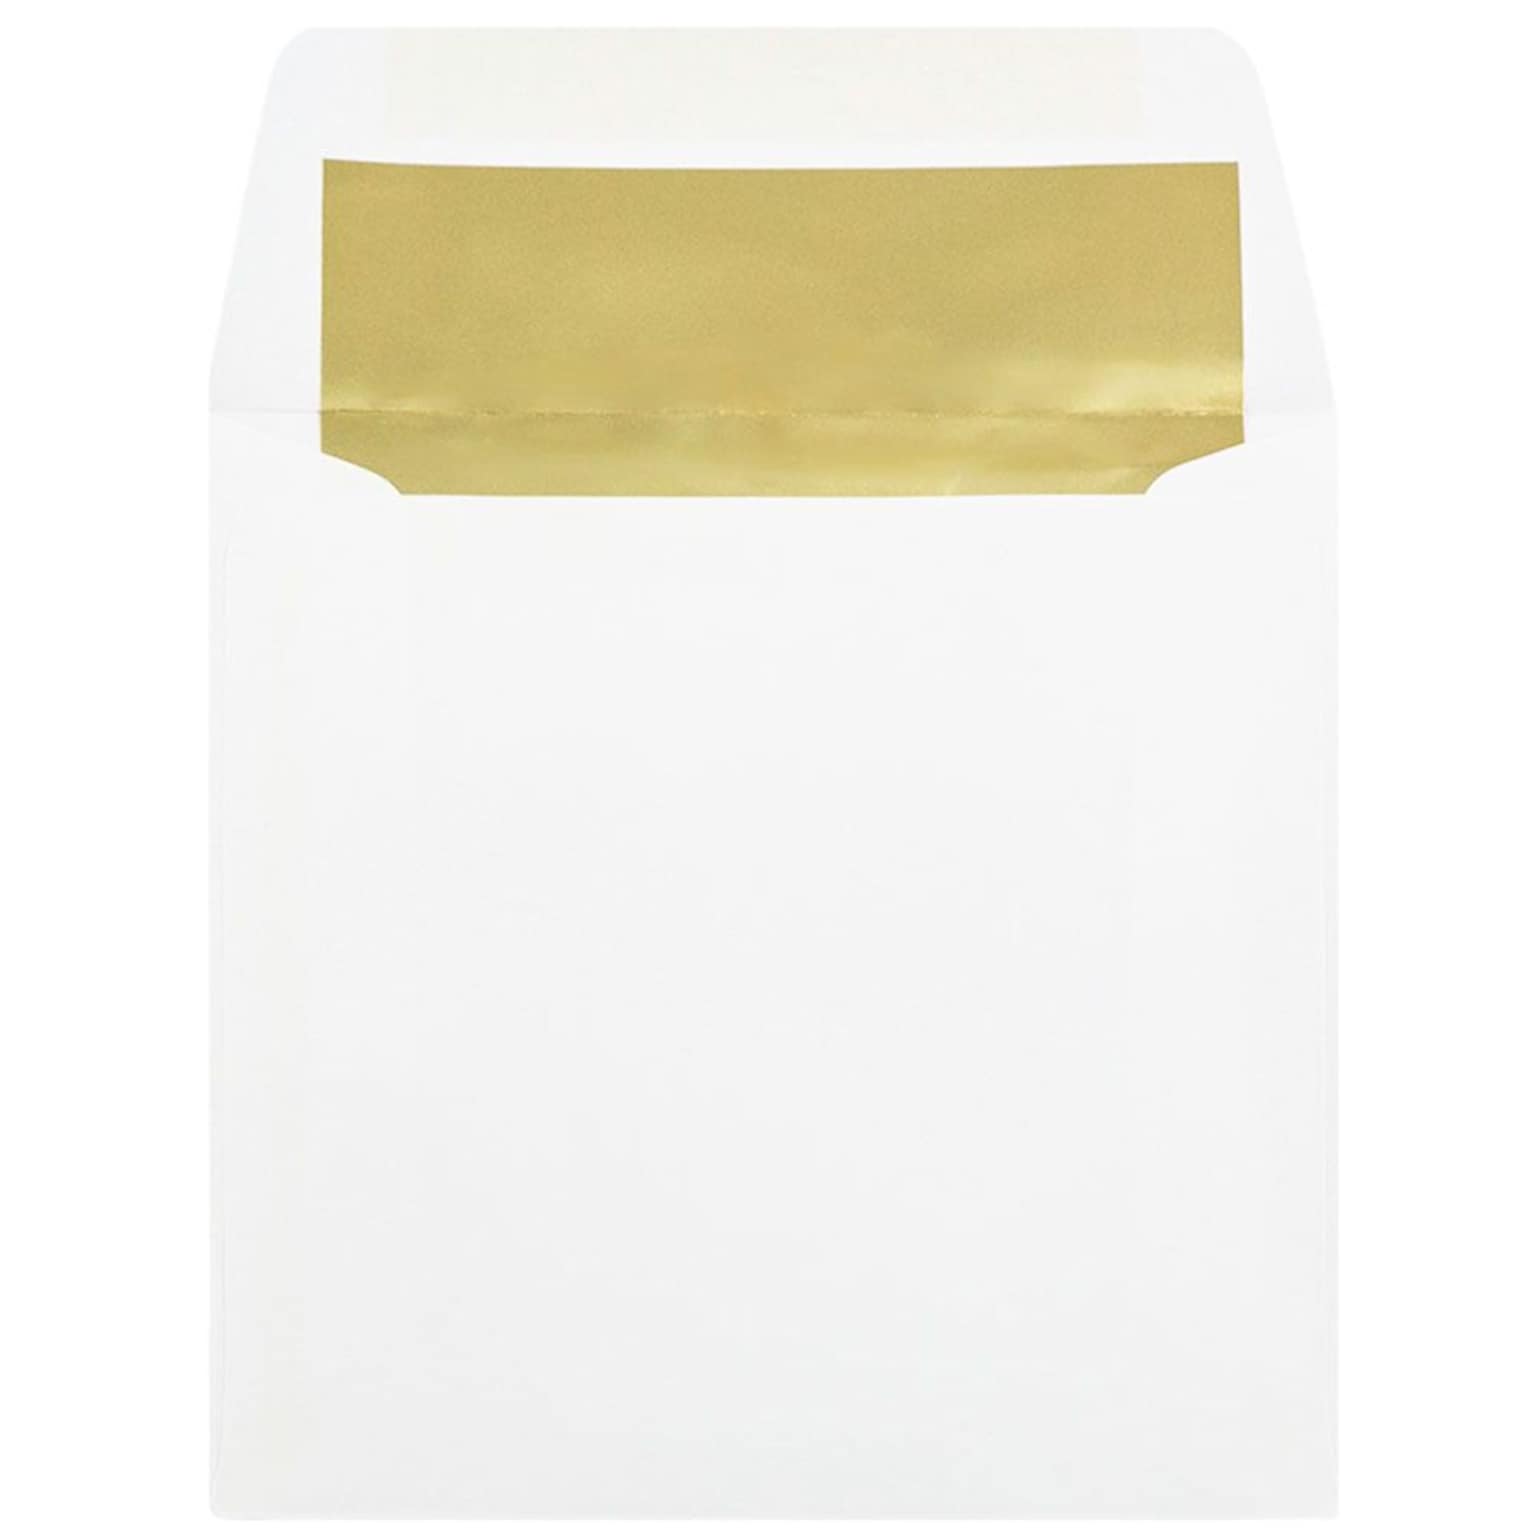 JAM Paper® 6 x 6 Square Foil Lined Invitation Envelopes, White with Gold Foil, 25/Pack (3244689)